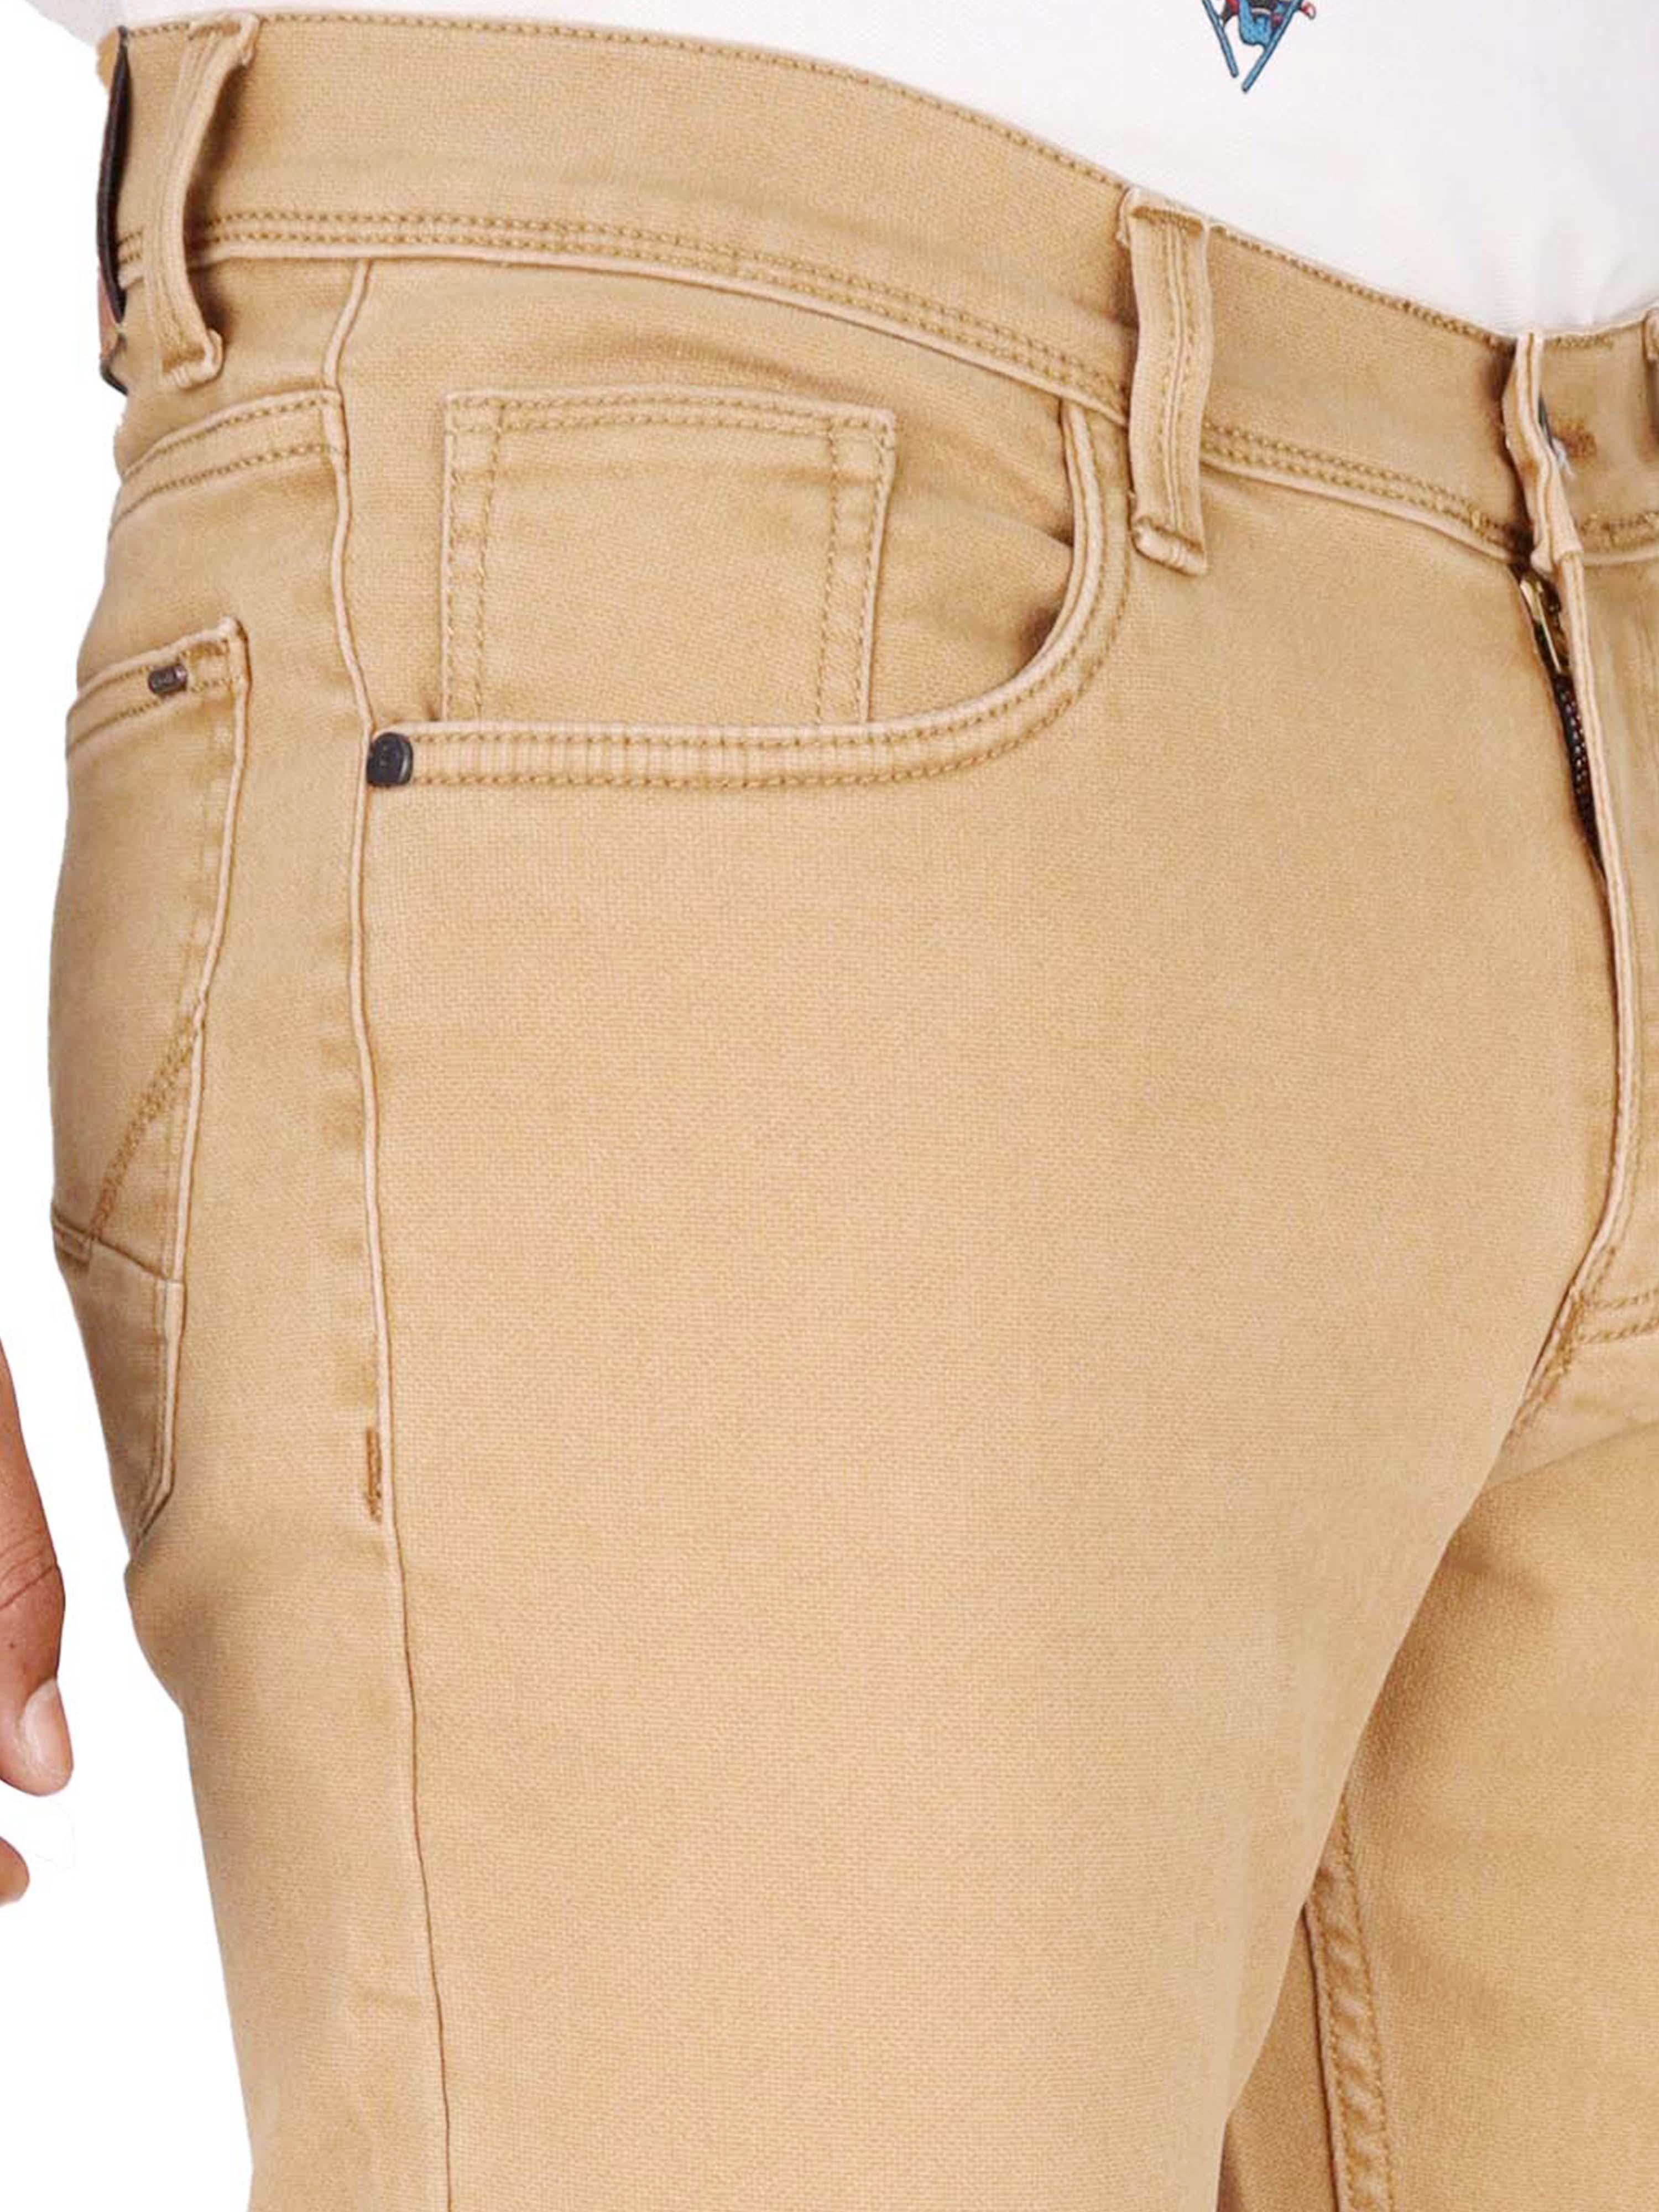 Buy Derby Khaki Clean Look Slim Fit Jeans at Amazonin